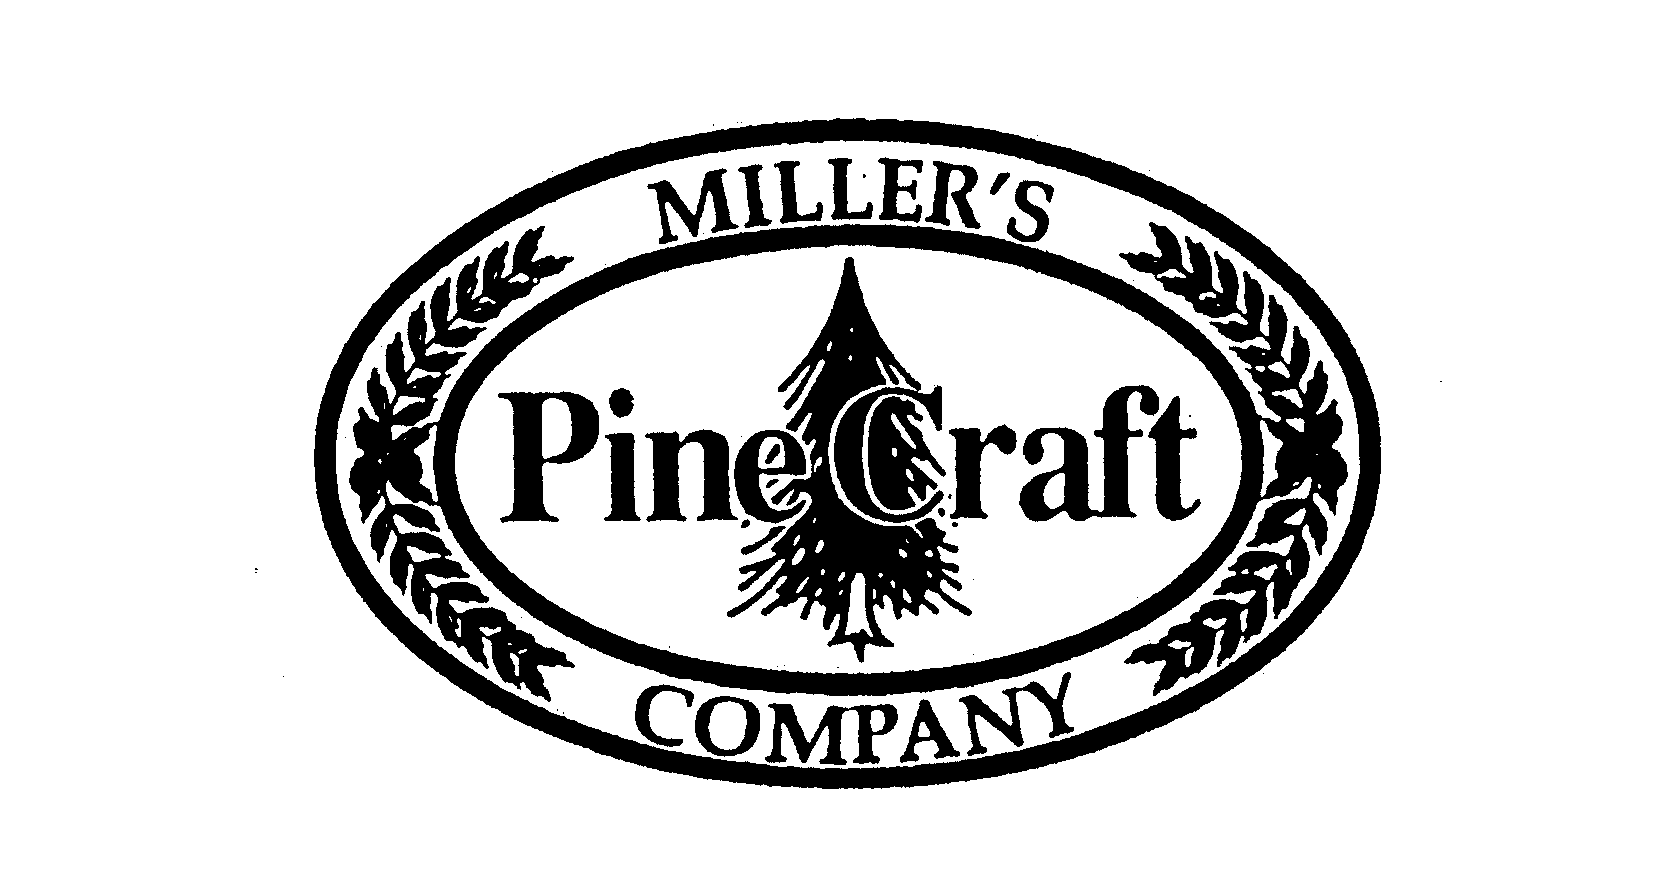  MILLER'S PINECRAFT COMPANY